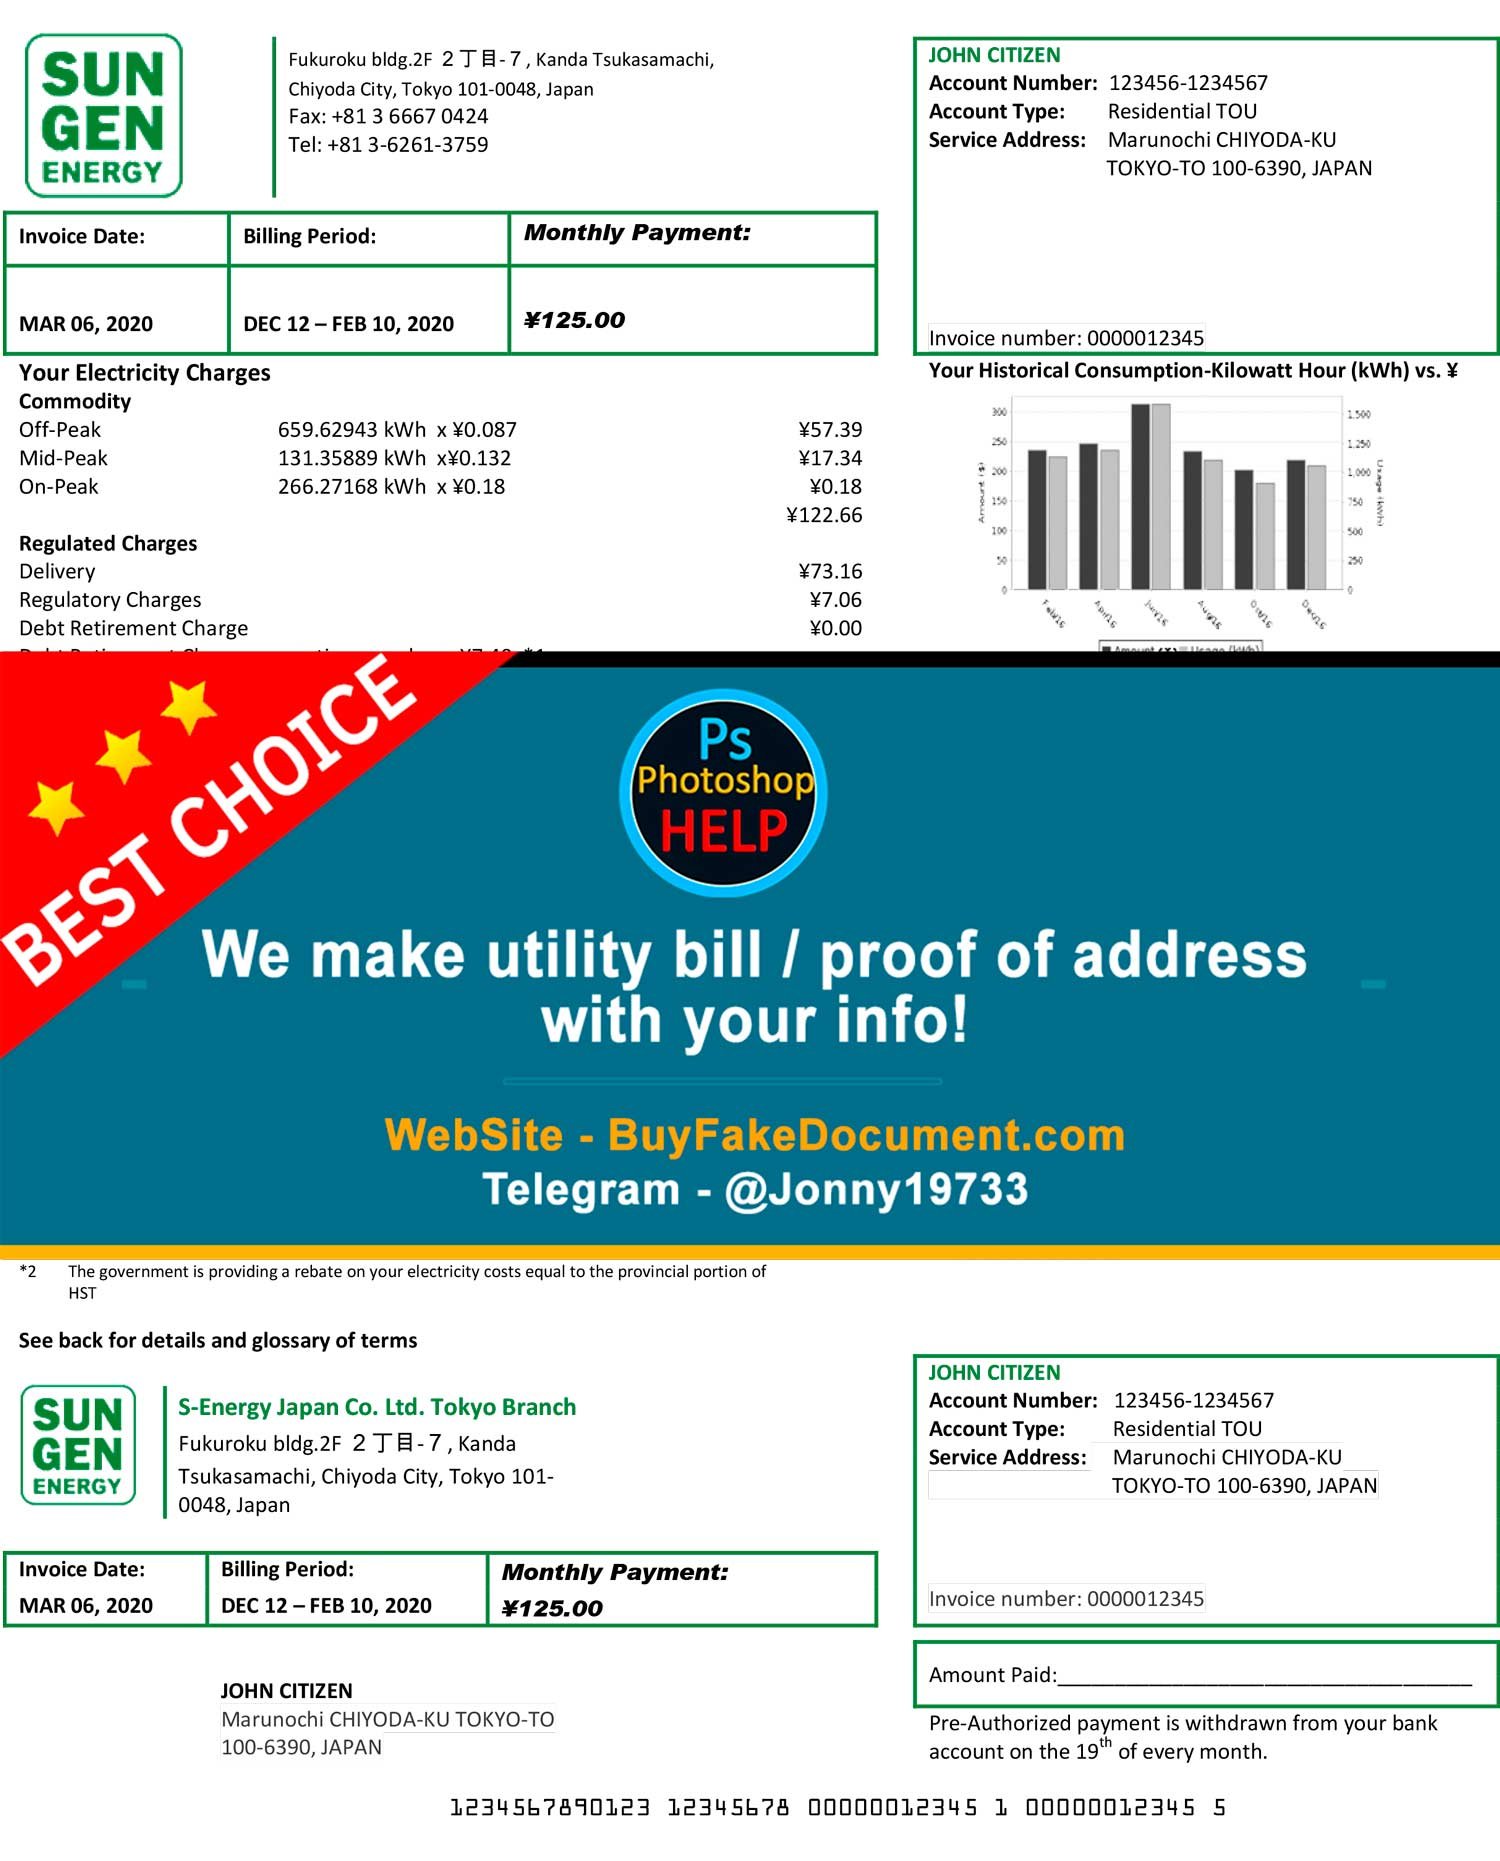 Japan S Energy Japan Co. Ltd. Tokyo Branch Fake Utility bill